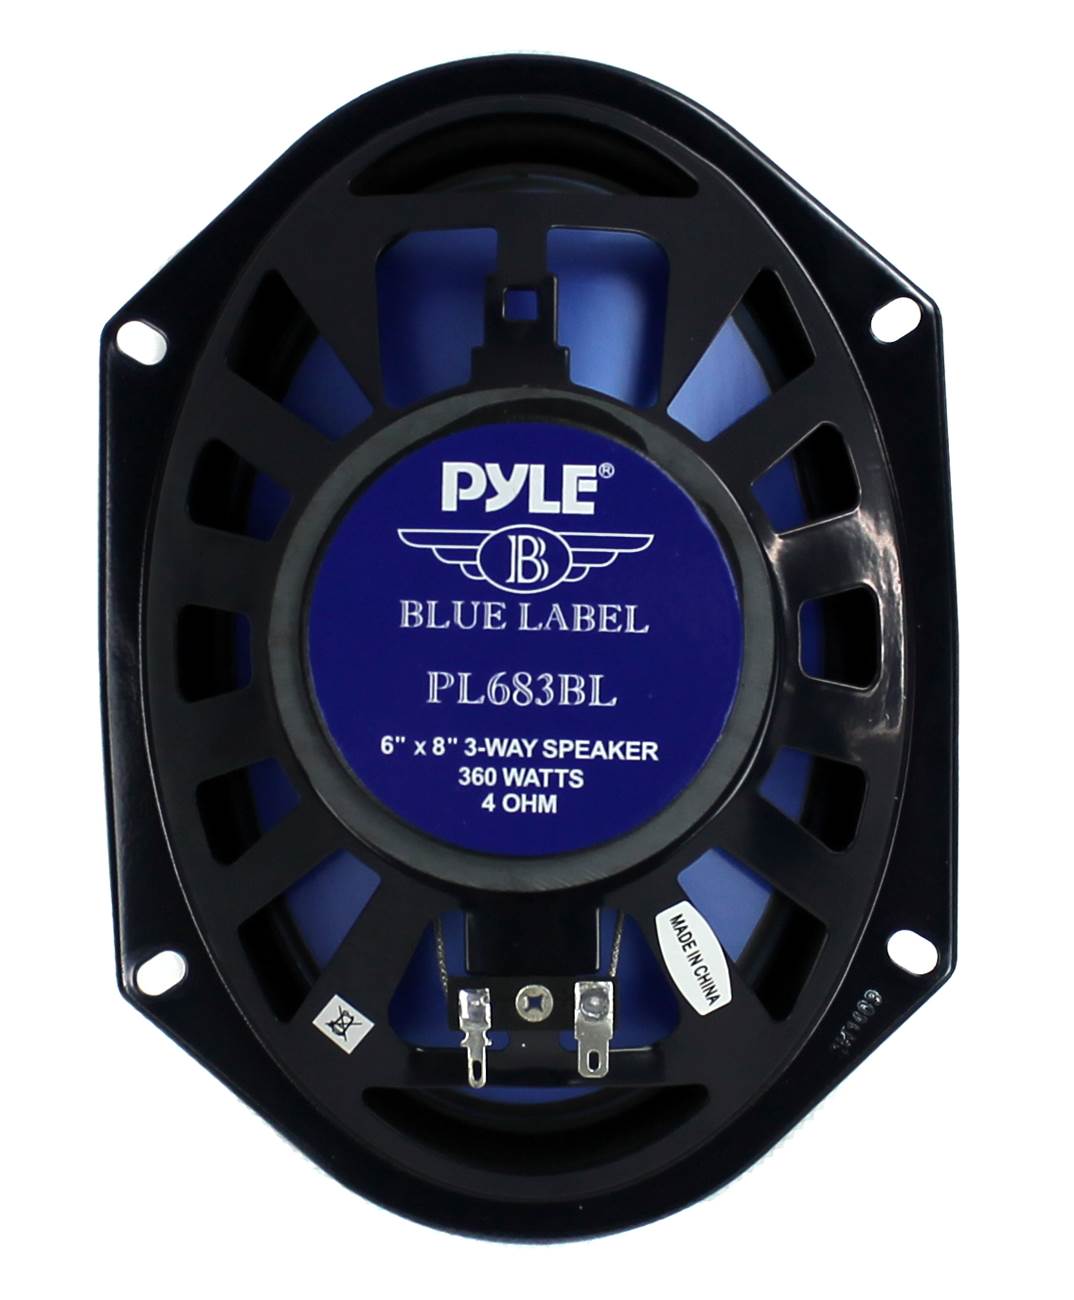 Pyle PL683BL 6x8" 360 Watt 3-Way Car Coaxial Audio Speakers Stereo, Blue (Pair) - image 4 of 7